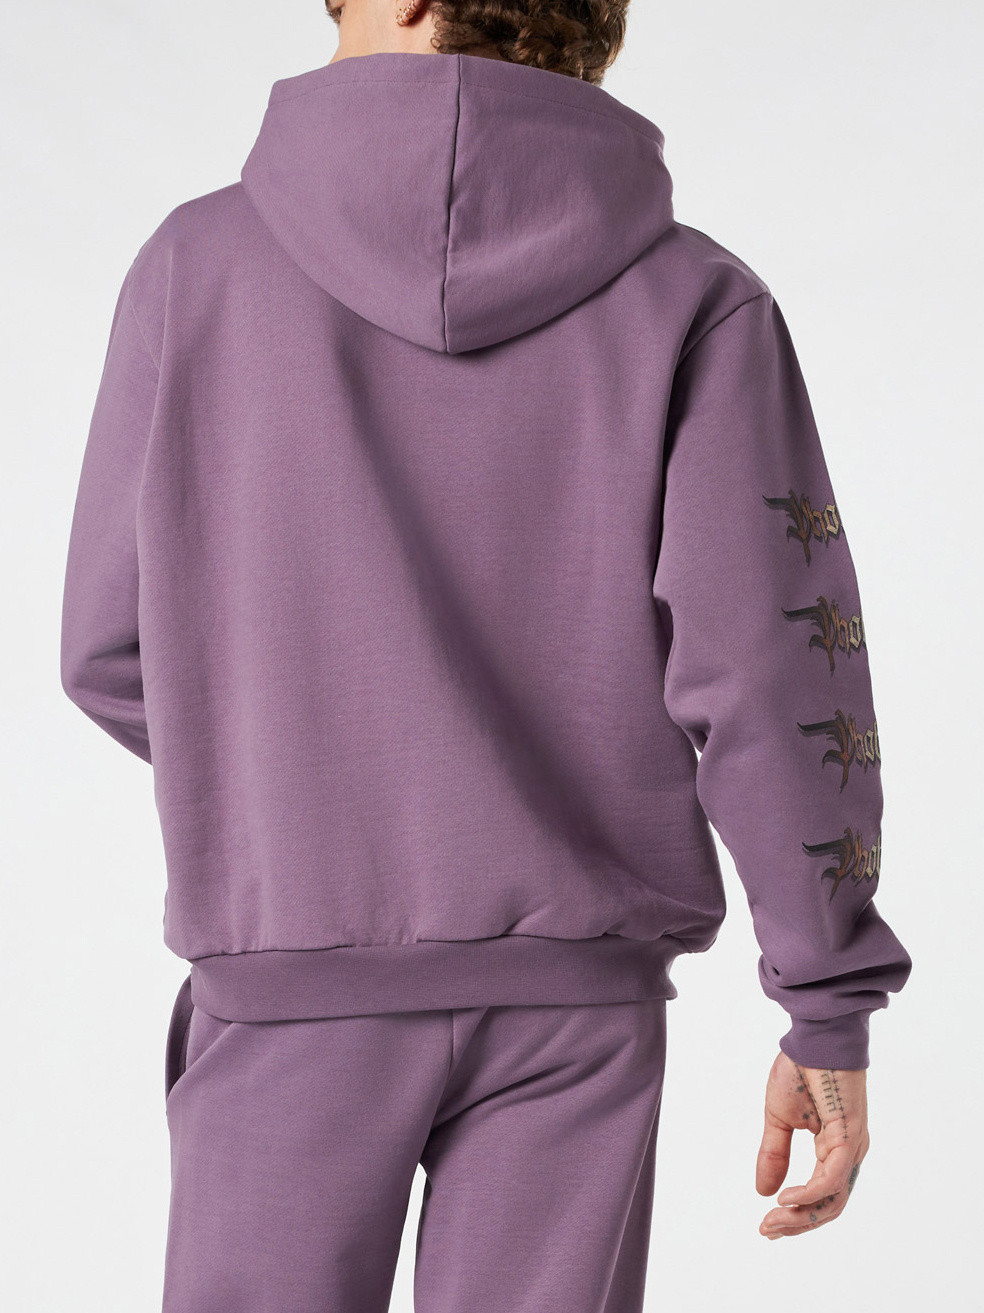 Phobia - Cotton sweatshirt with shark print, Purple, large image number 2